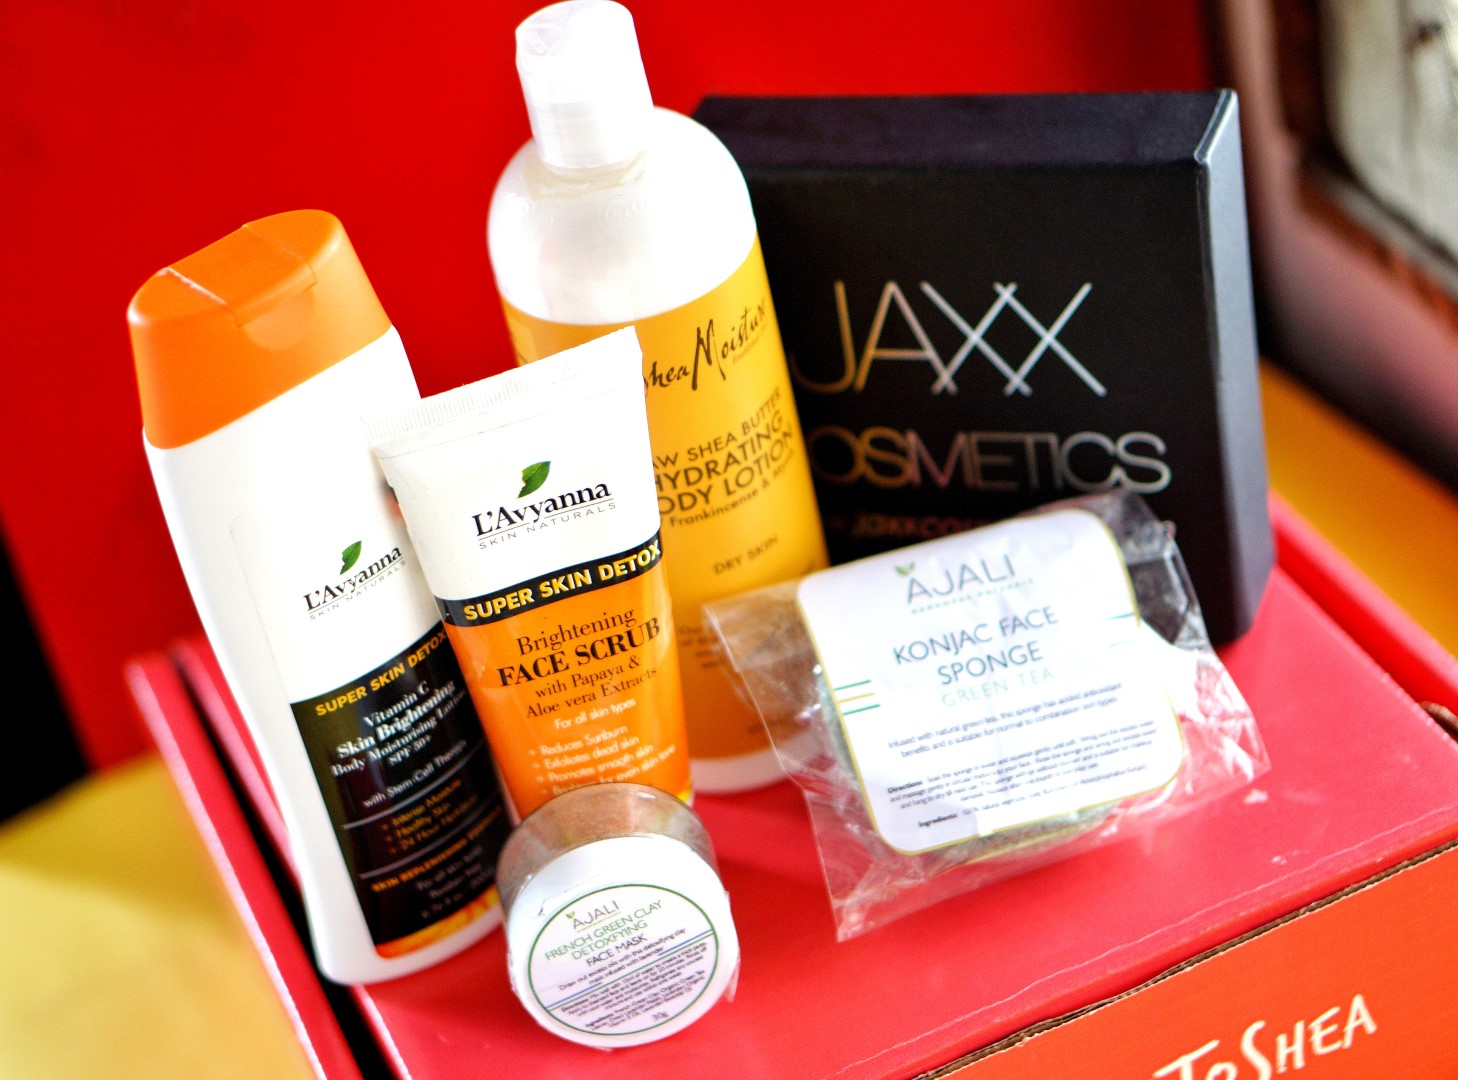 L'avyanna naturals super skin detox, jaxx cosmetics lipsticsk and ajali naturals products